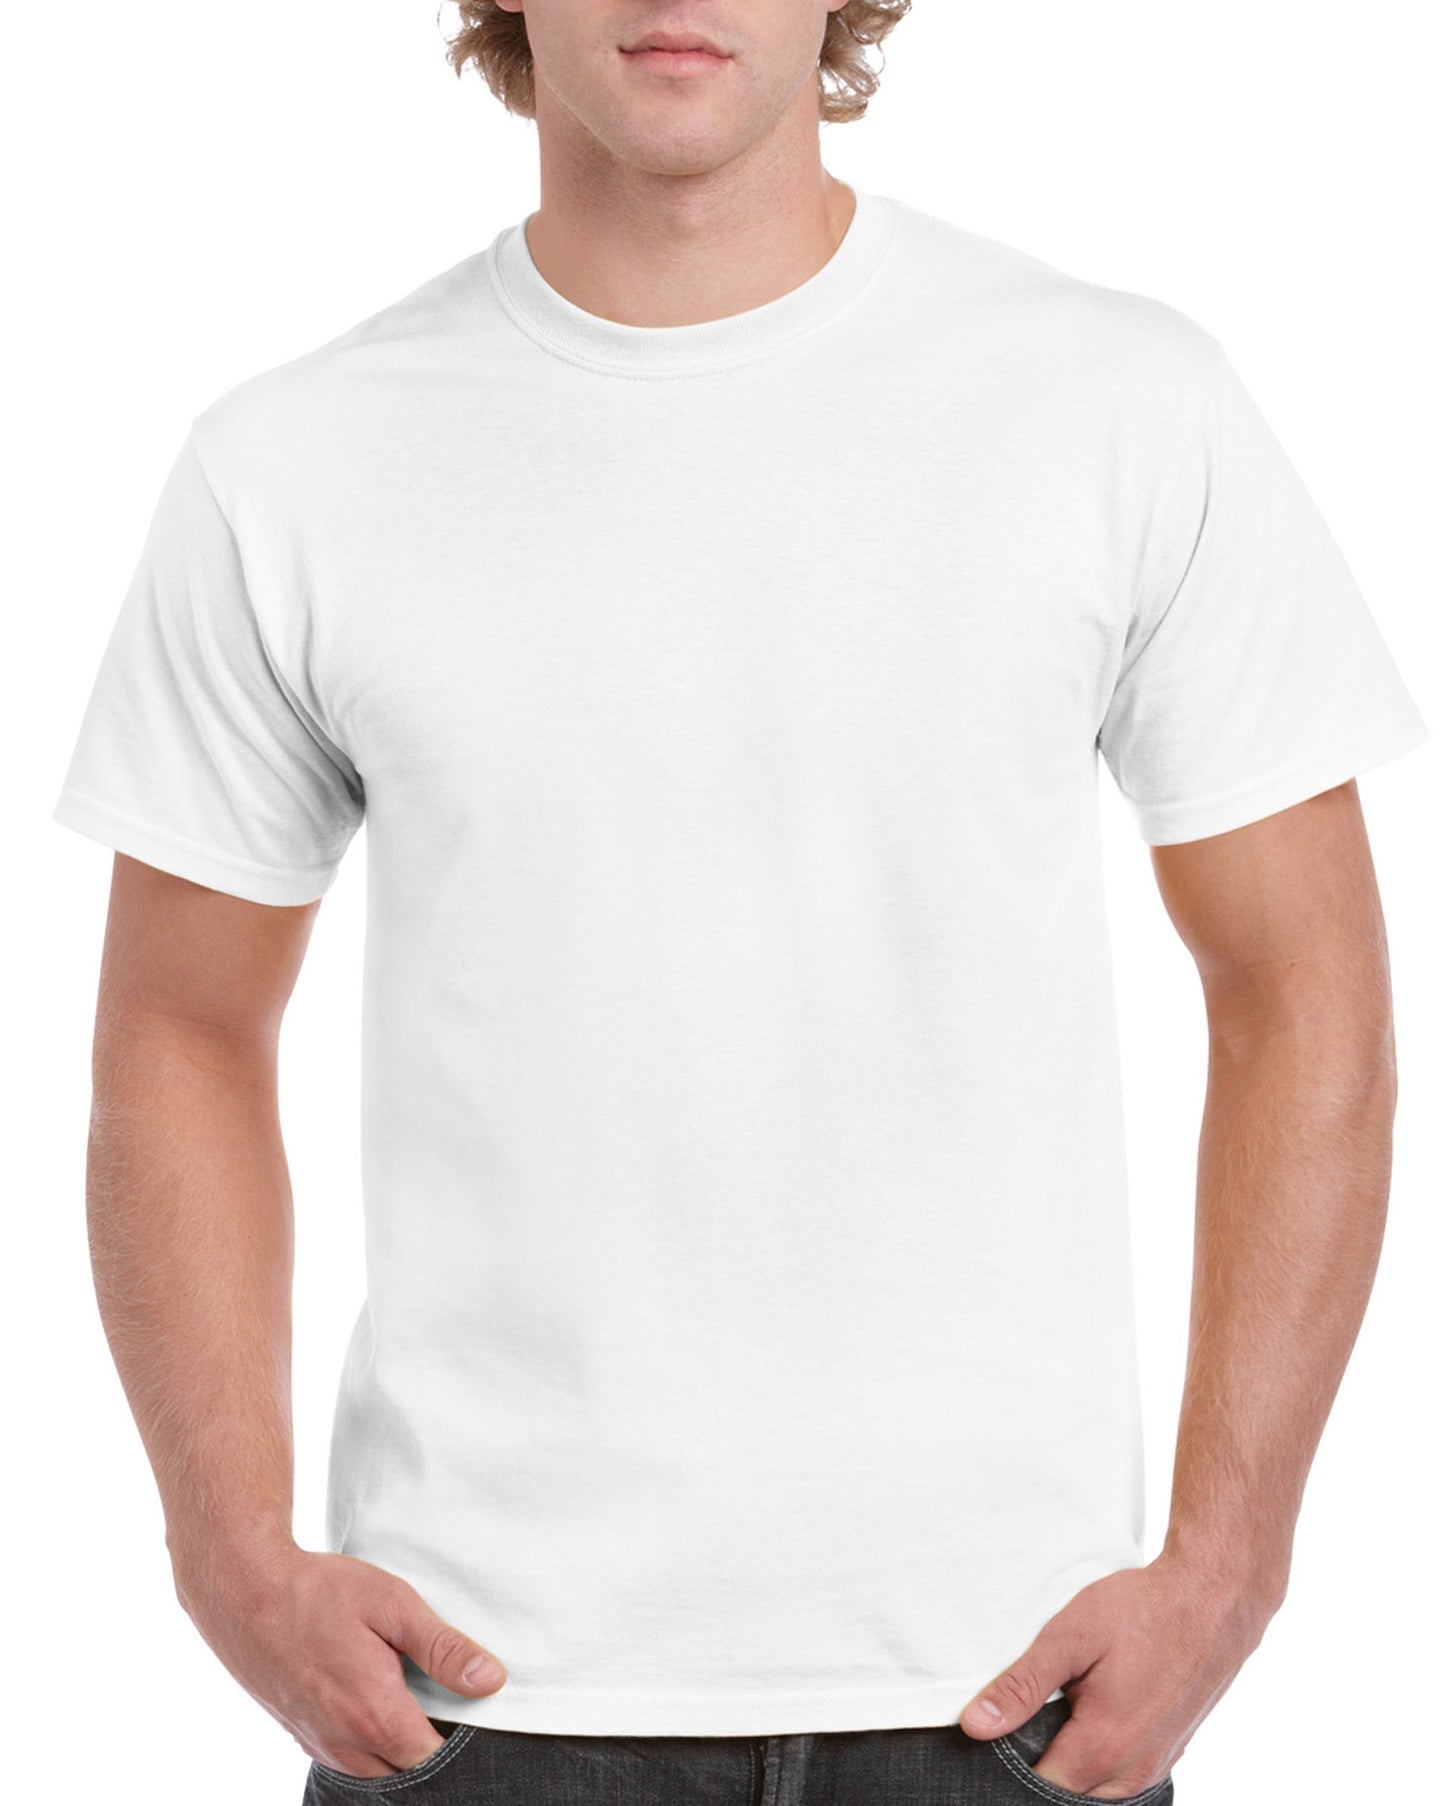 Men Ultra Cotton S/S T-Shirt - White and Black